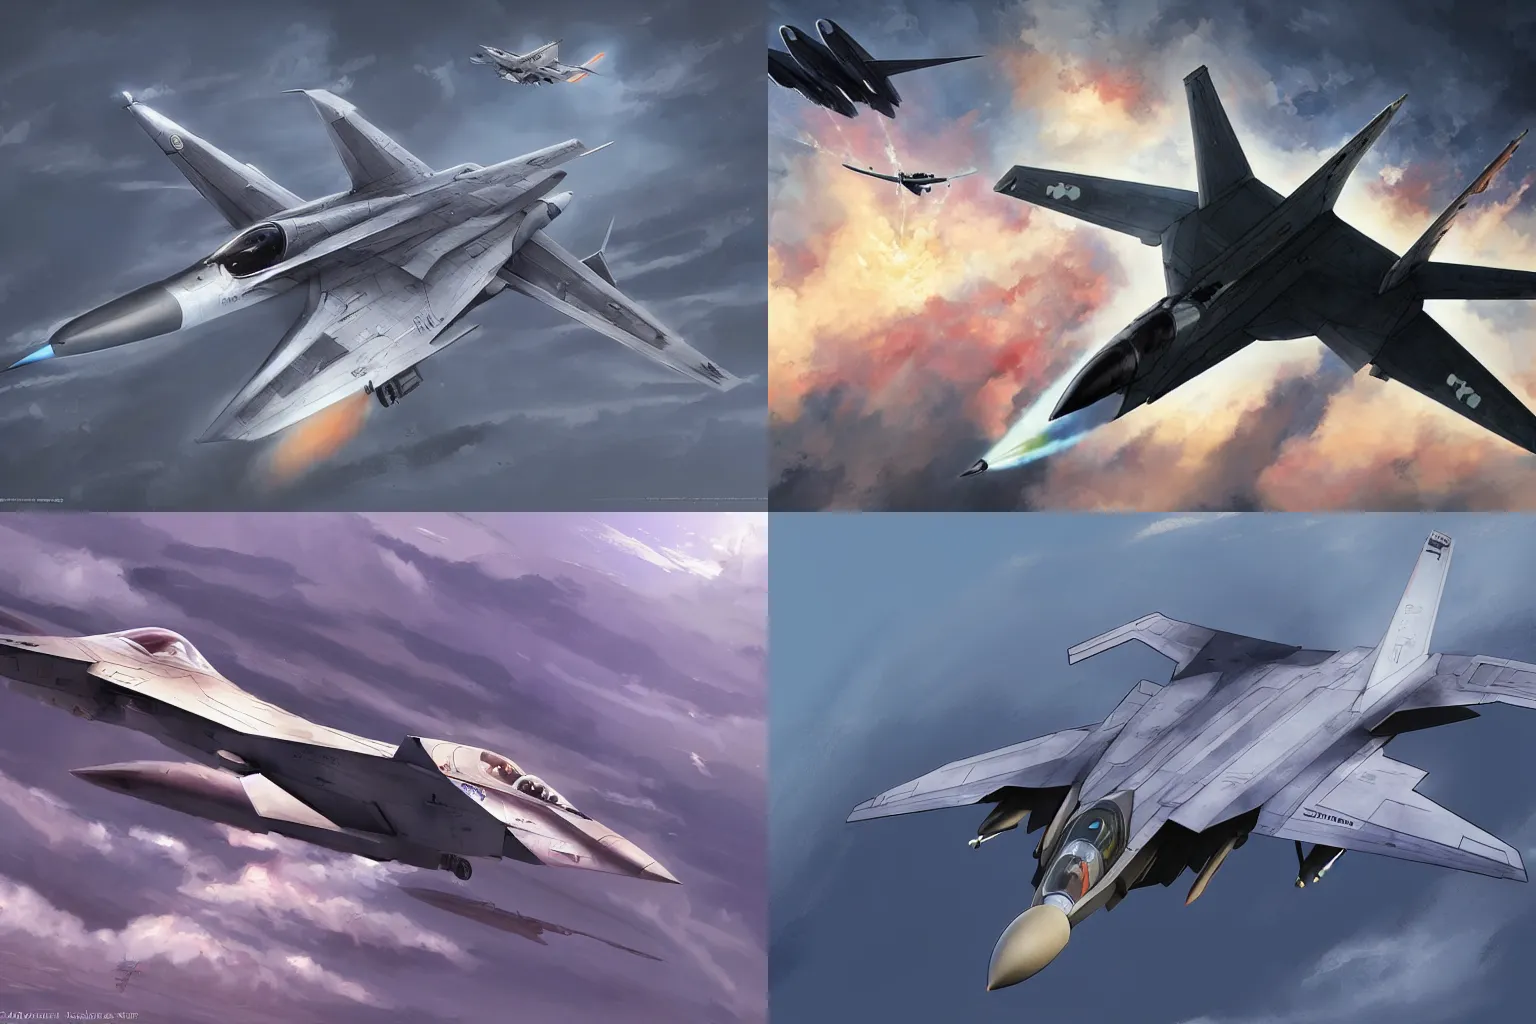 Prompt: iconic fighter jet plane by jama jurabaev, top secret space plane, tomcat raptor hornet falcon, style of shoji kawamori, style of greg rutkowski